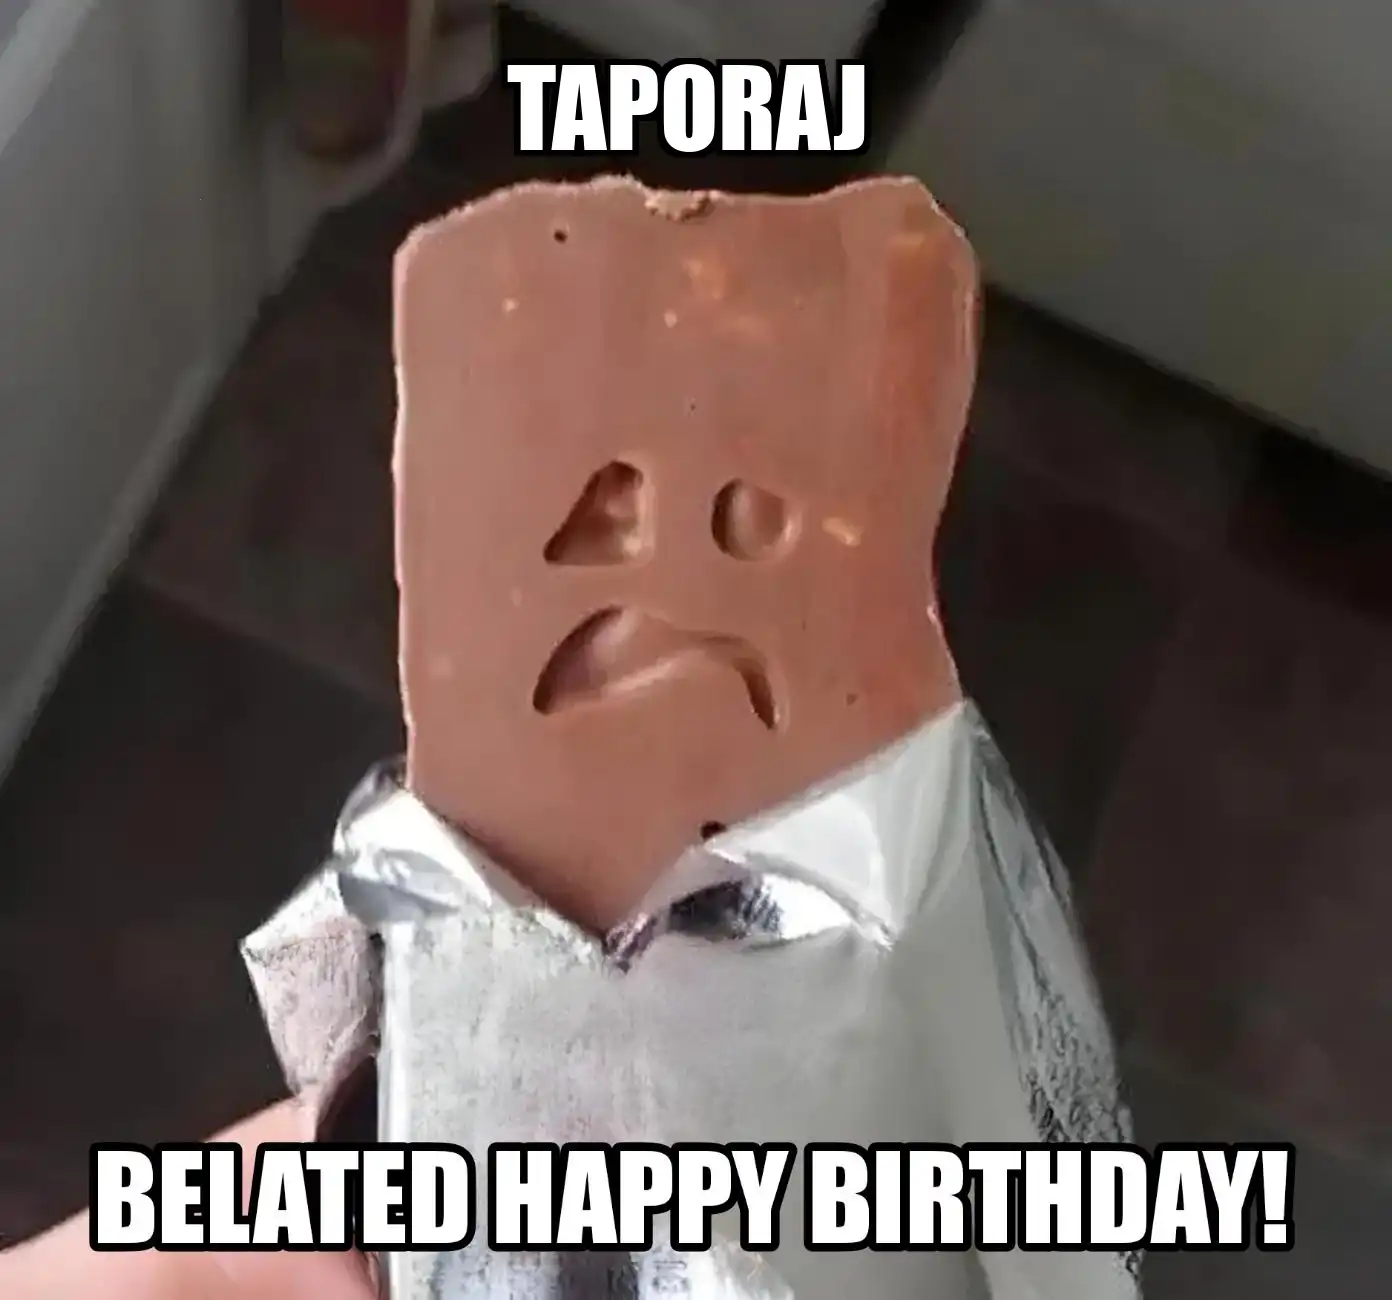 Happy Birthday Taporaj Belated Happy Birthday Meme